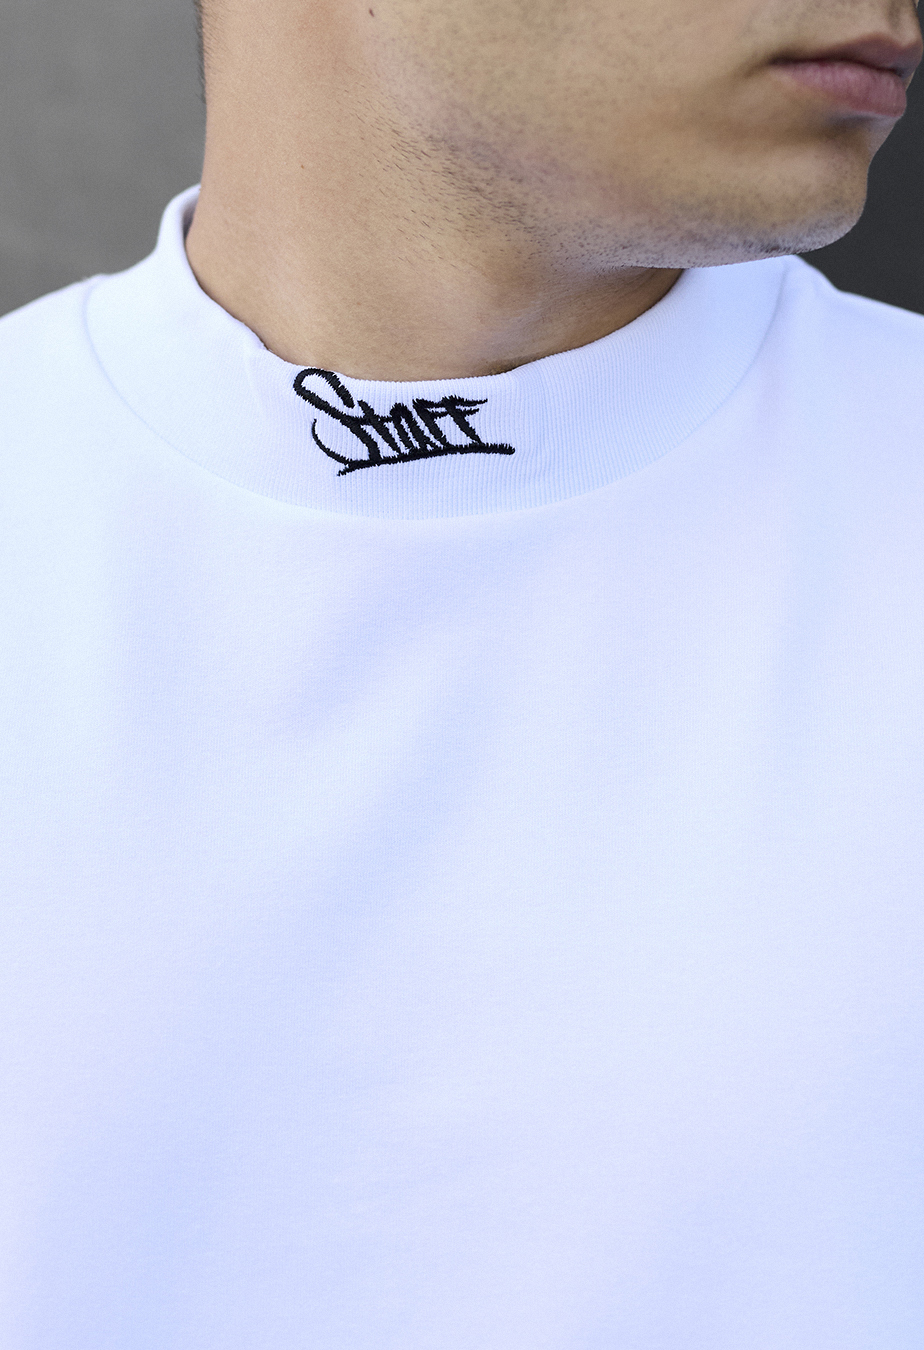 Letni komplet: koszulka + szorty Staff di black & white oversize